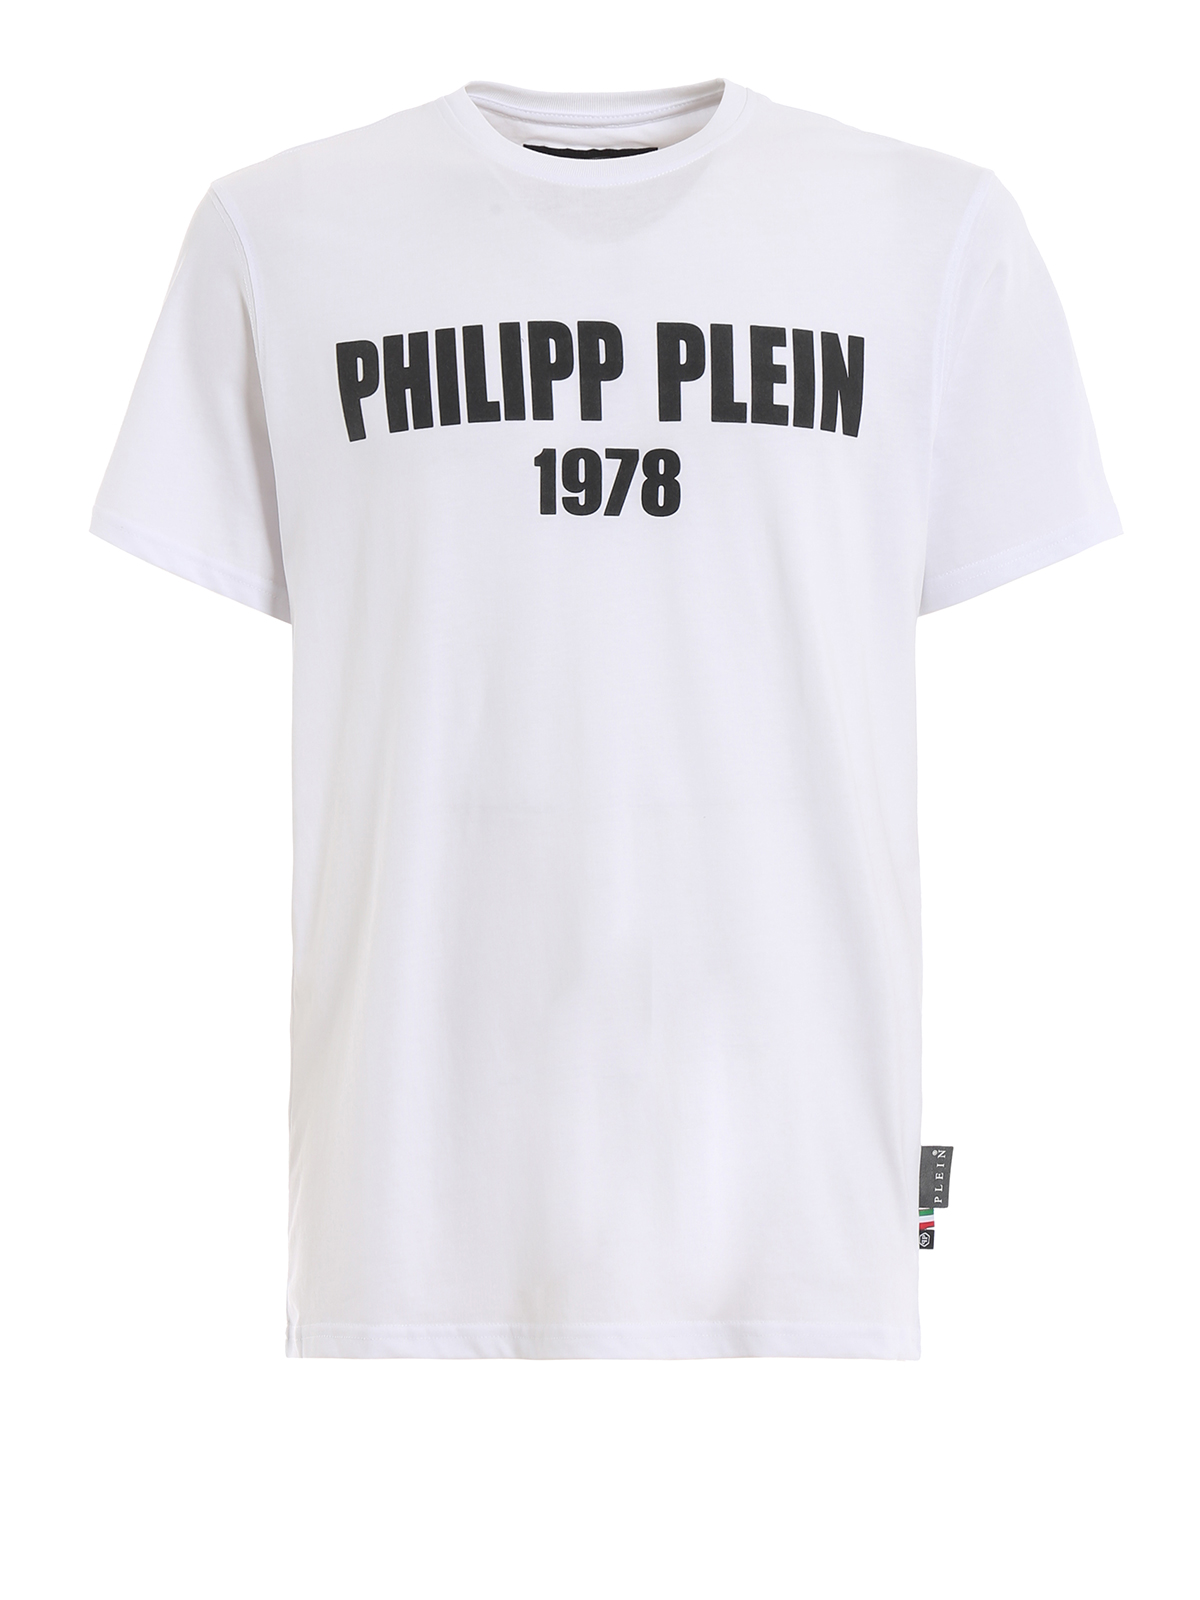 T-shirts Philipp Plein - PP 1978 short sleeve white Tee ...